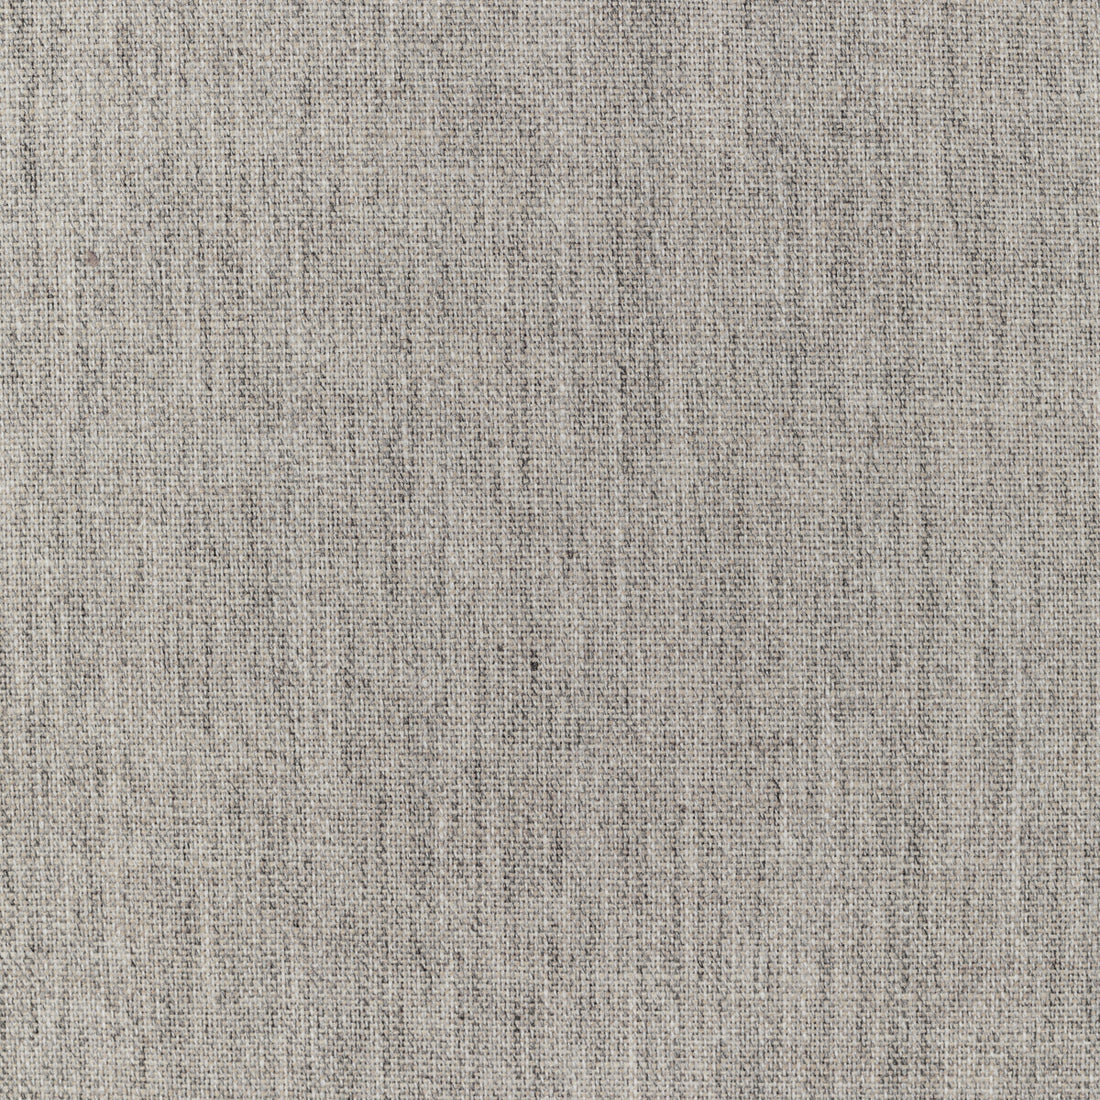 Kravet Smart fabric in 36112-6106 color - pattern 36112.6106.0 - by Kravet Smart in the Performance Kravetarmor collection